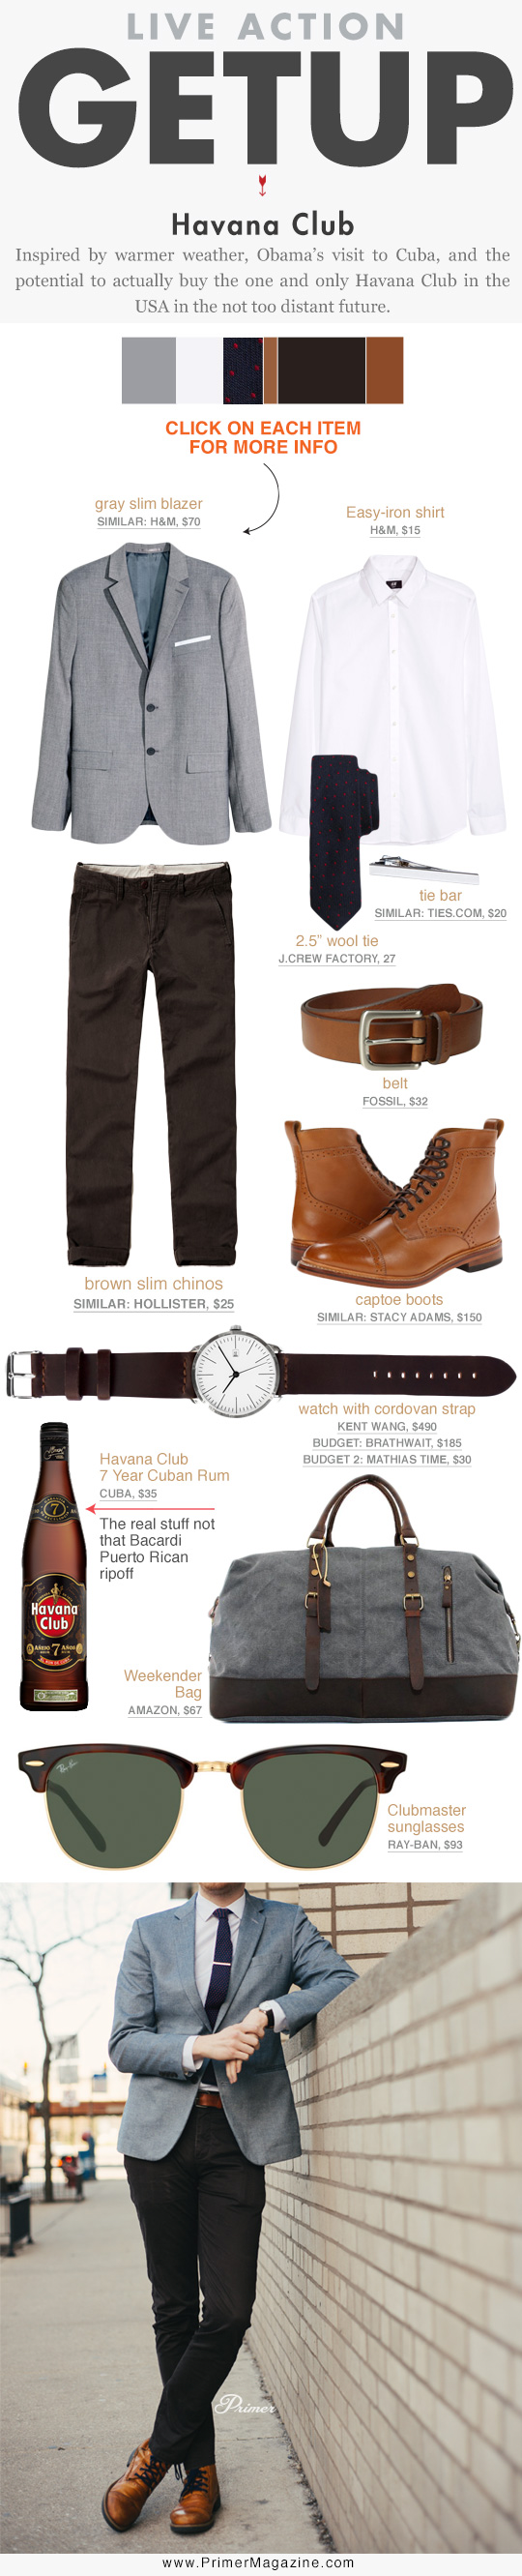 Getup Havana Club - Gray blazer, white shirt and tie, brown pants, and tan boots